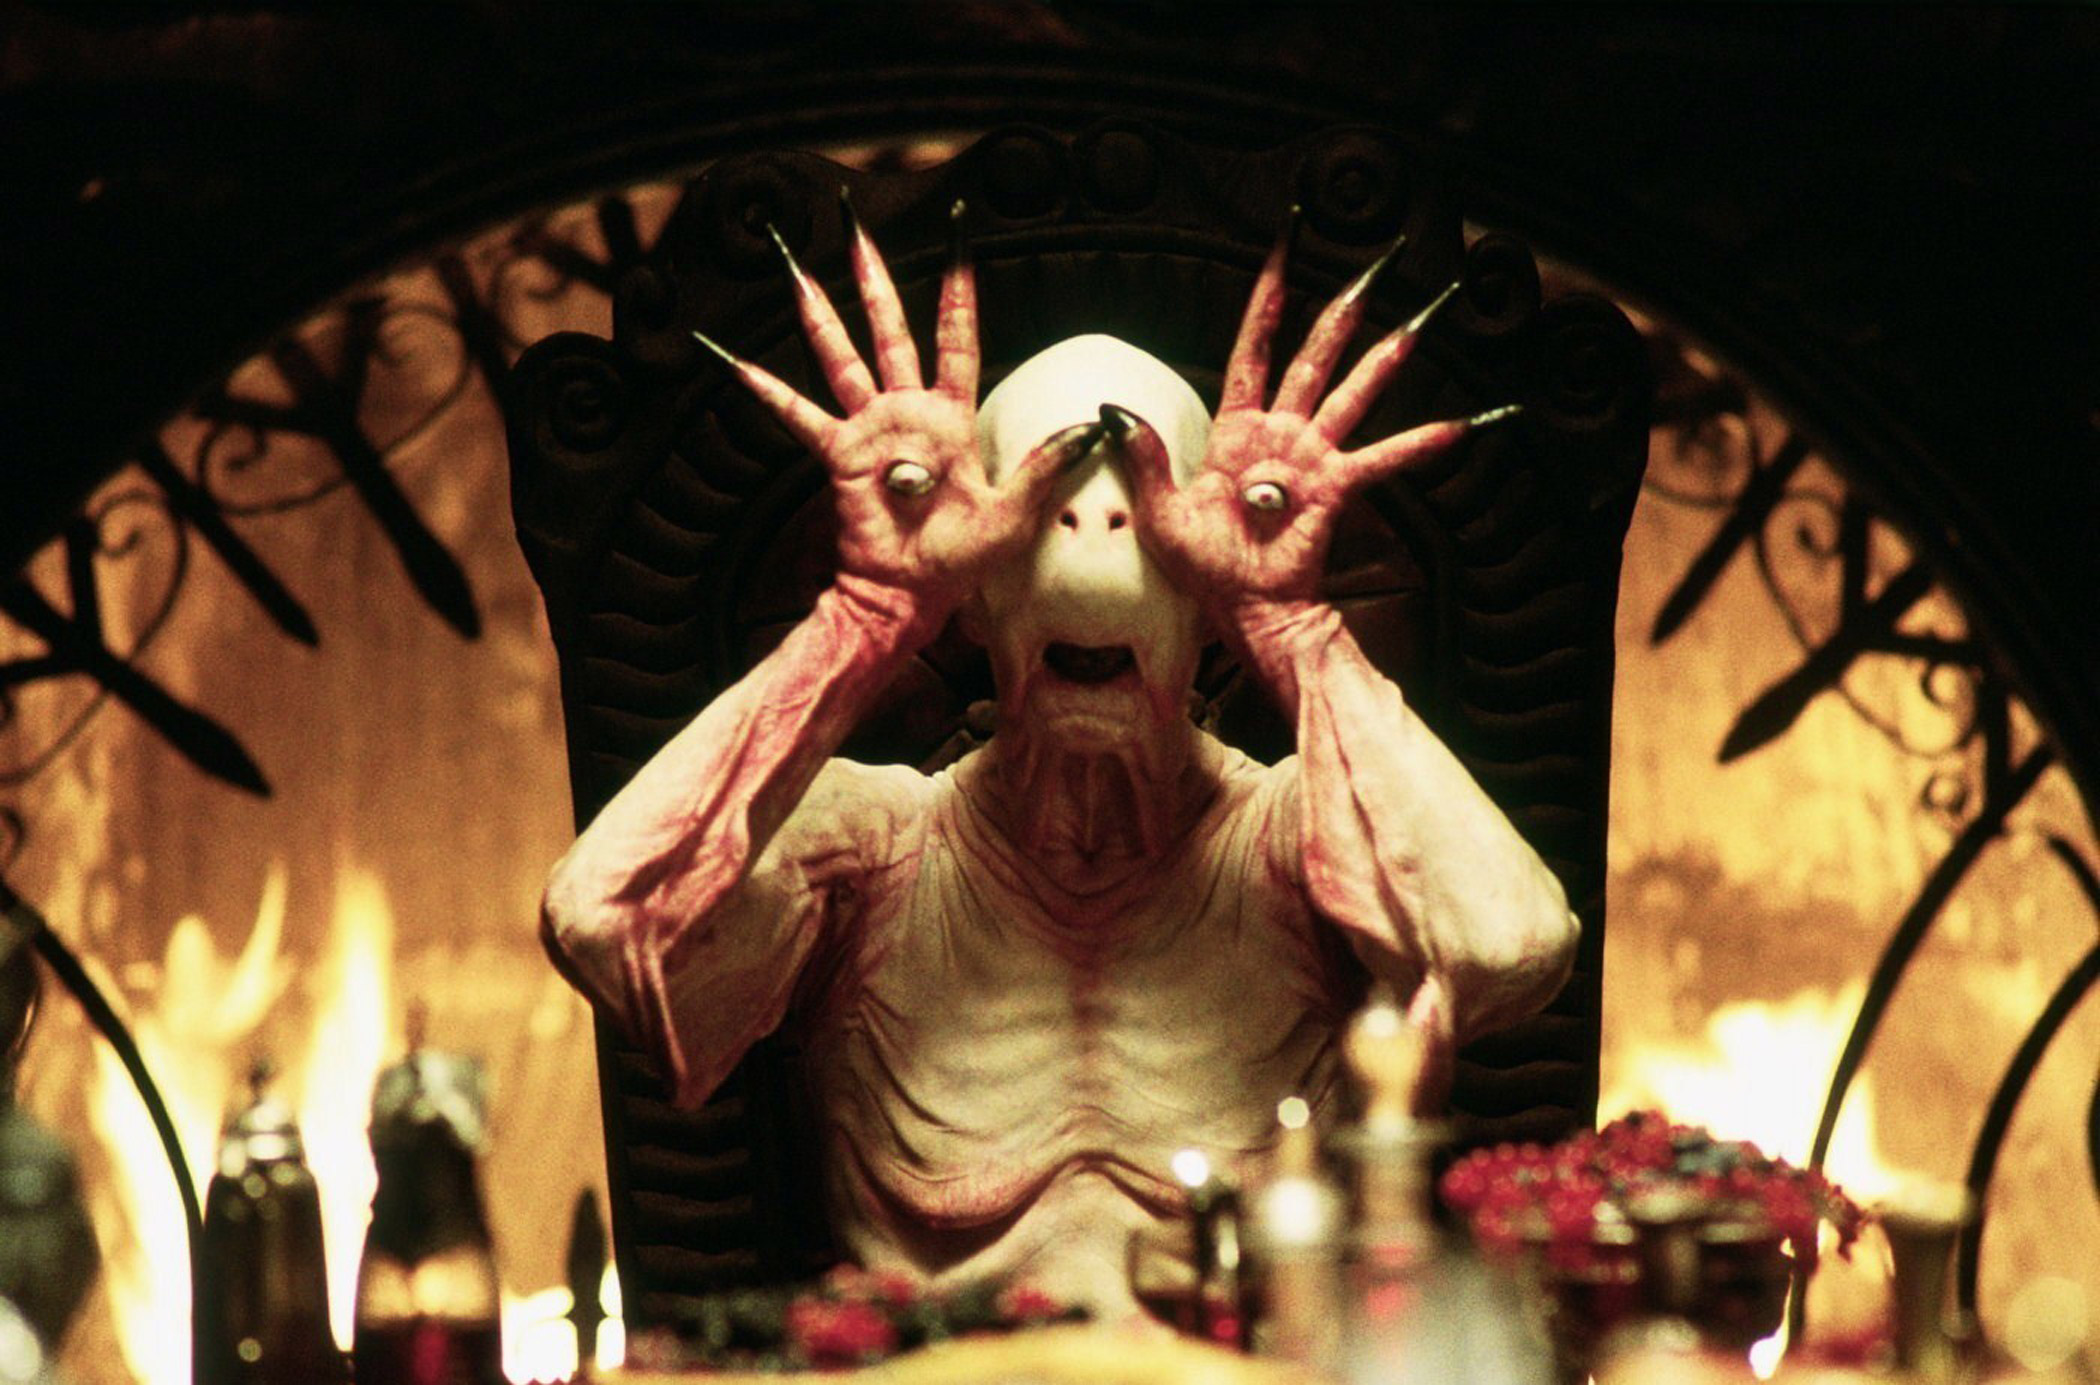 Doug Jones as Pale Man in Pan's Labyrinth, 2006.